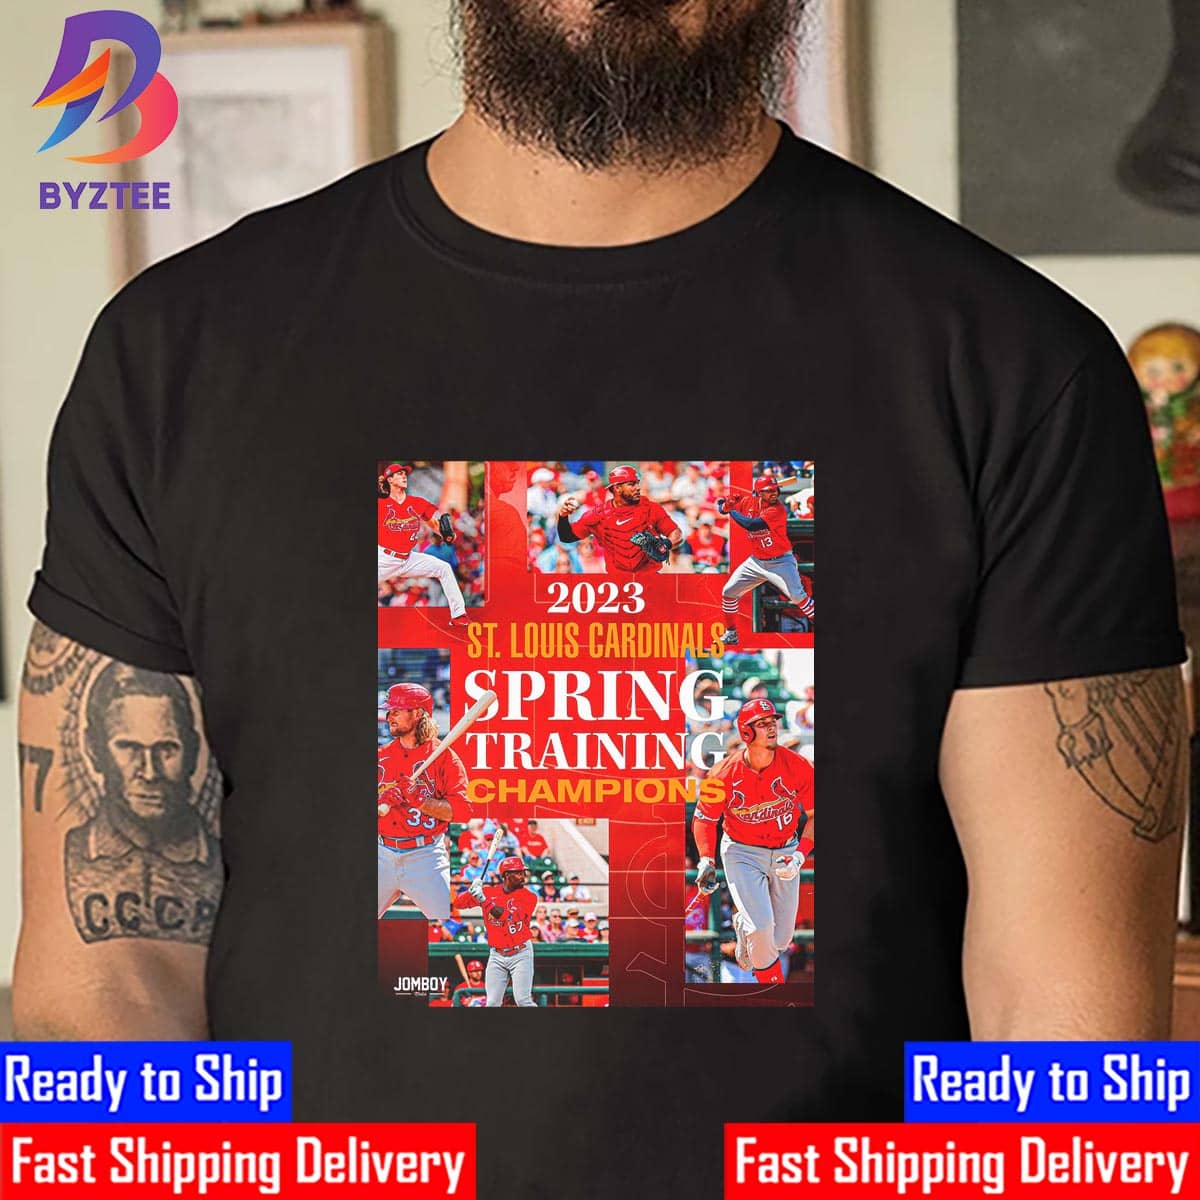 st louis cardinals spring training t shirts